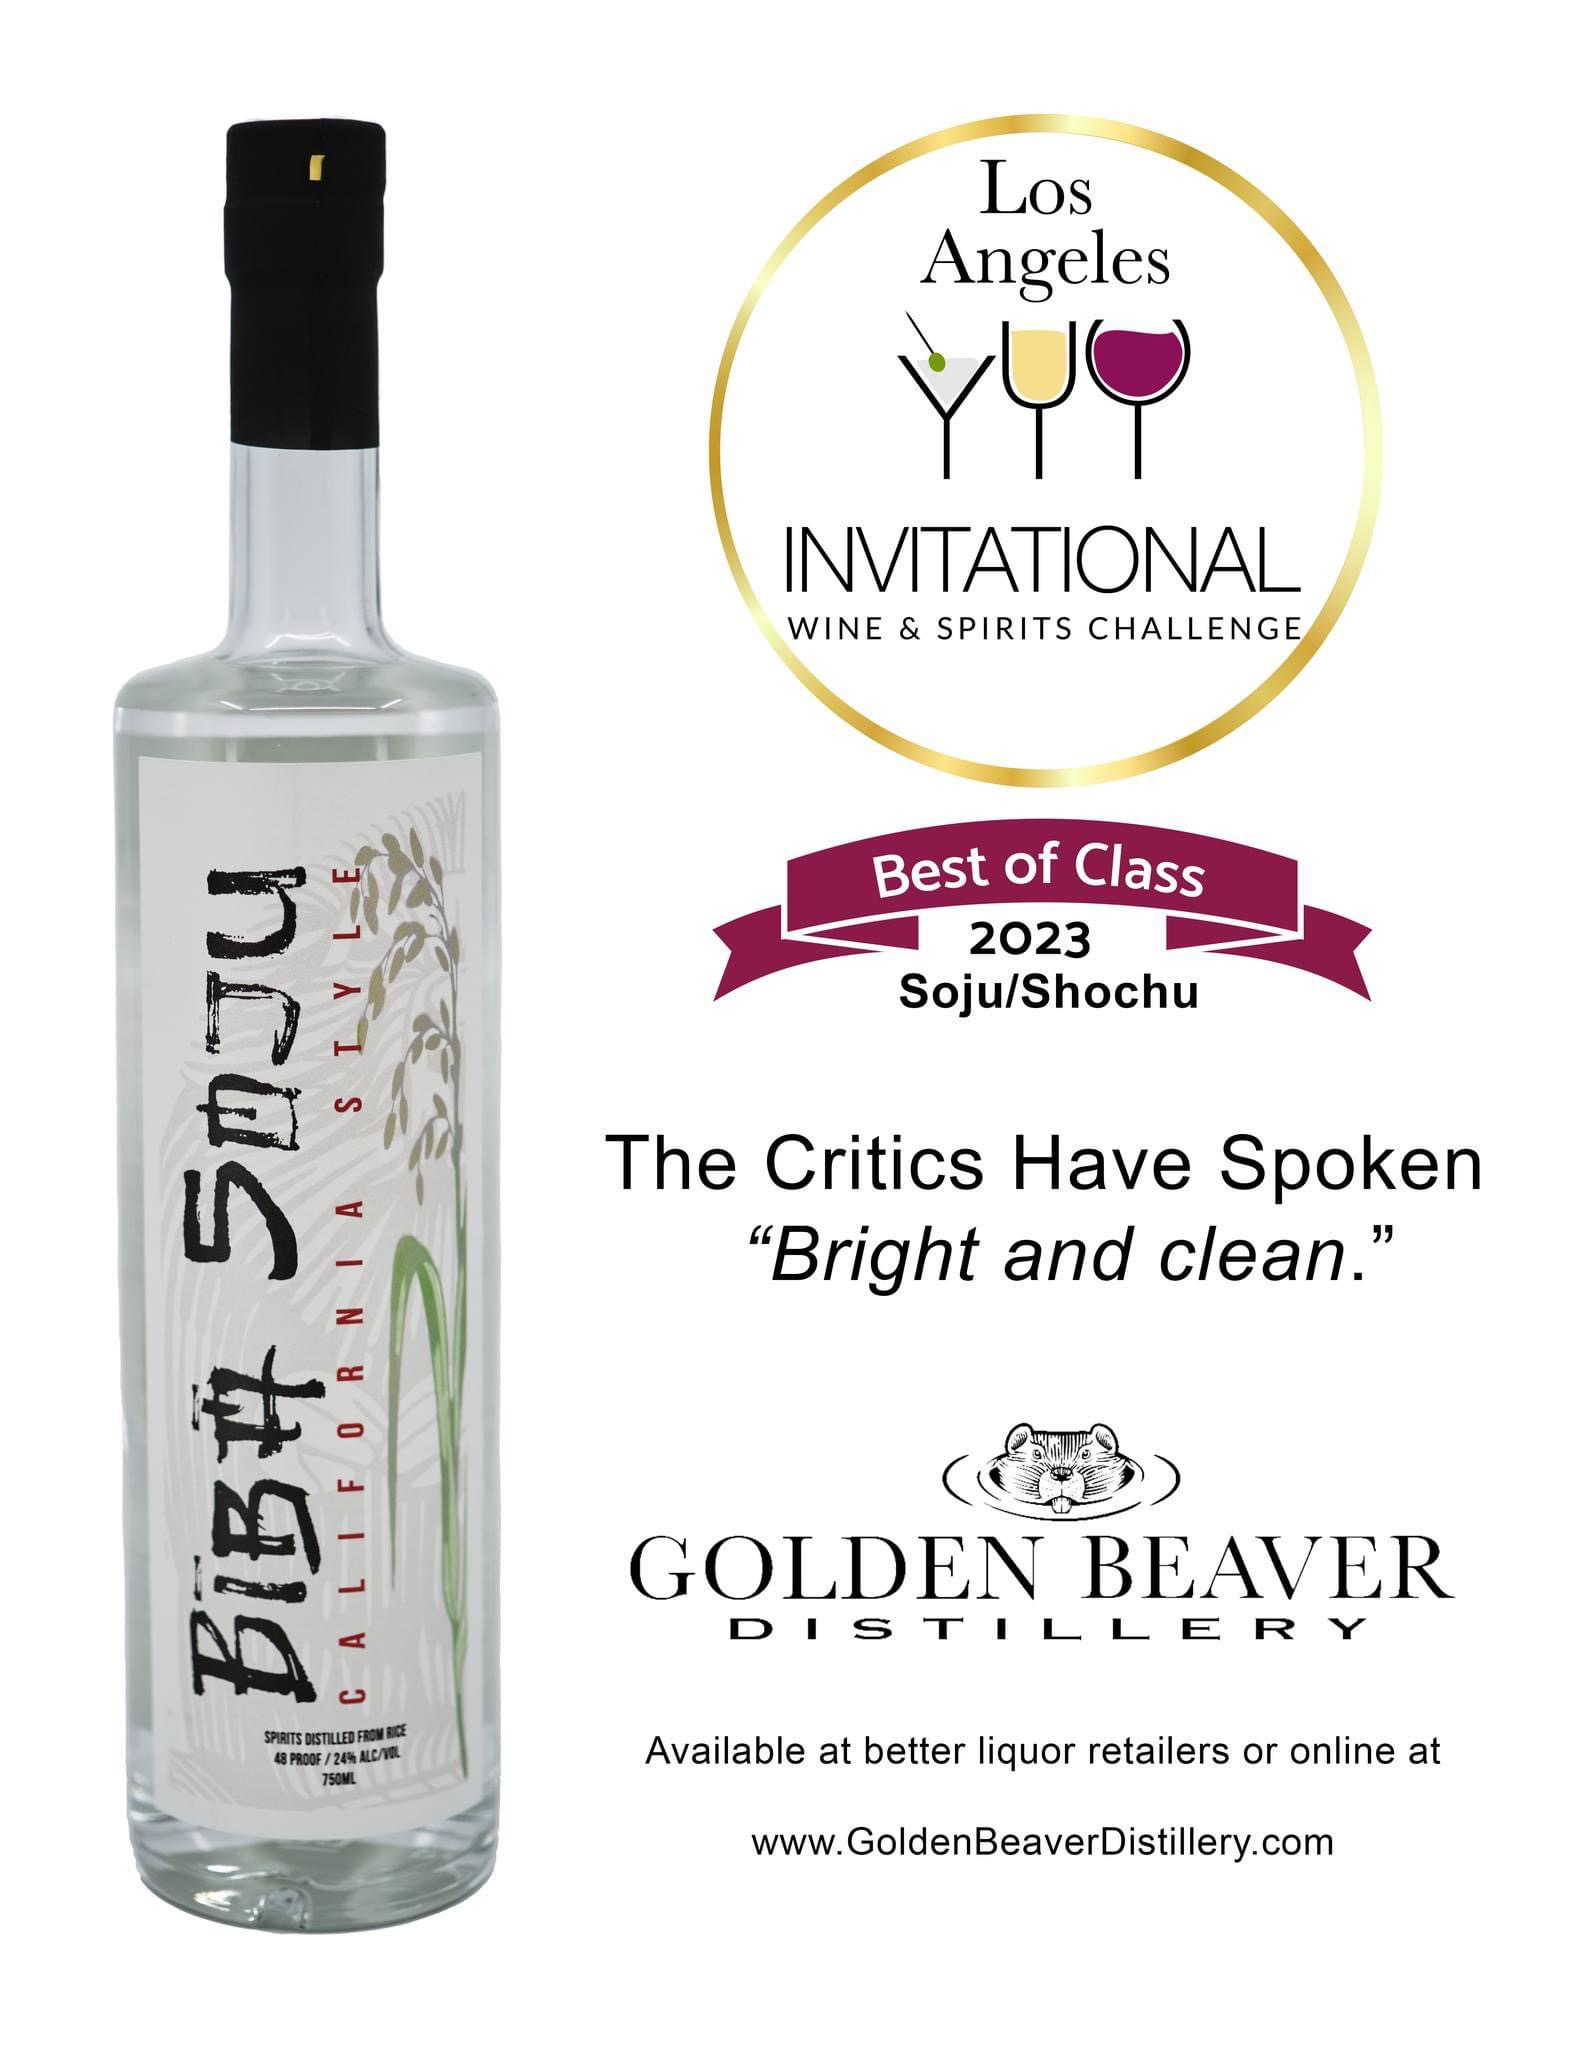 image of biba soju best of class award from Los Angeles invitational wine and spirits awards